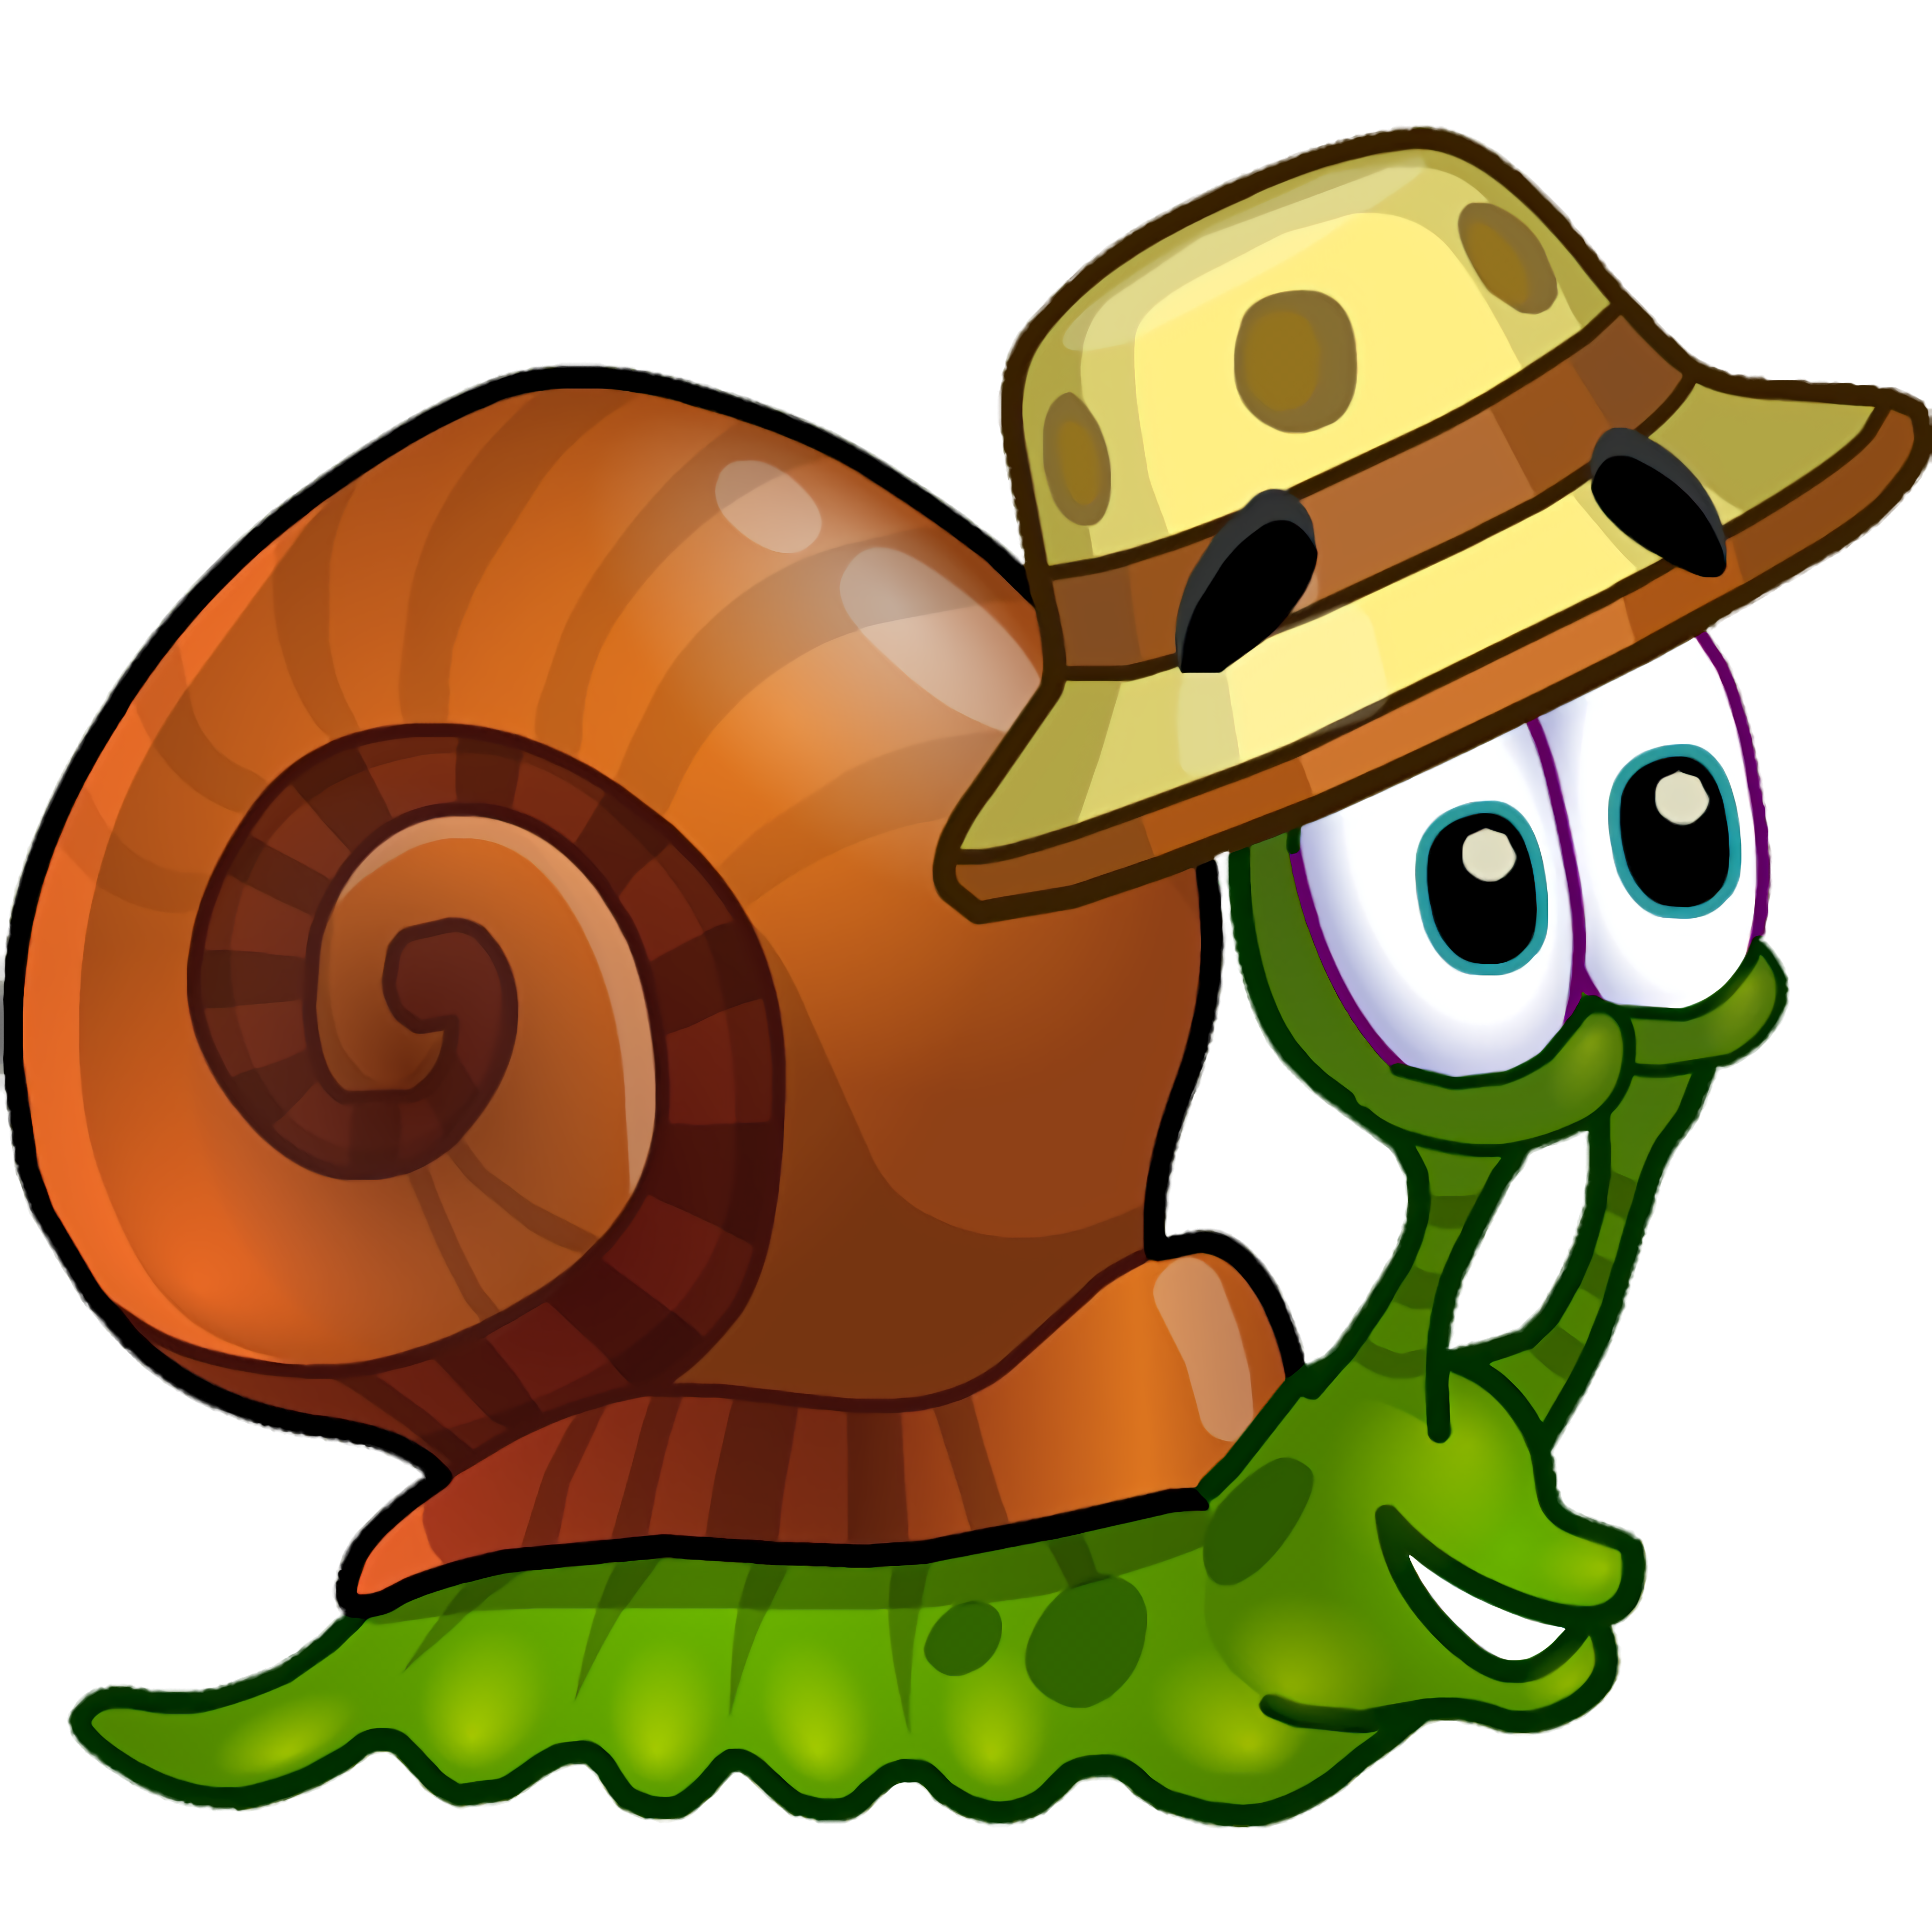 Улитка Боб 3 (Snail Bob 3). Снаил Боб. Snail Bob 2 (улитка Боб 2). Snail Bob (улитка Боб) 6. Улитка боб 1 3